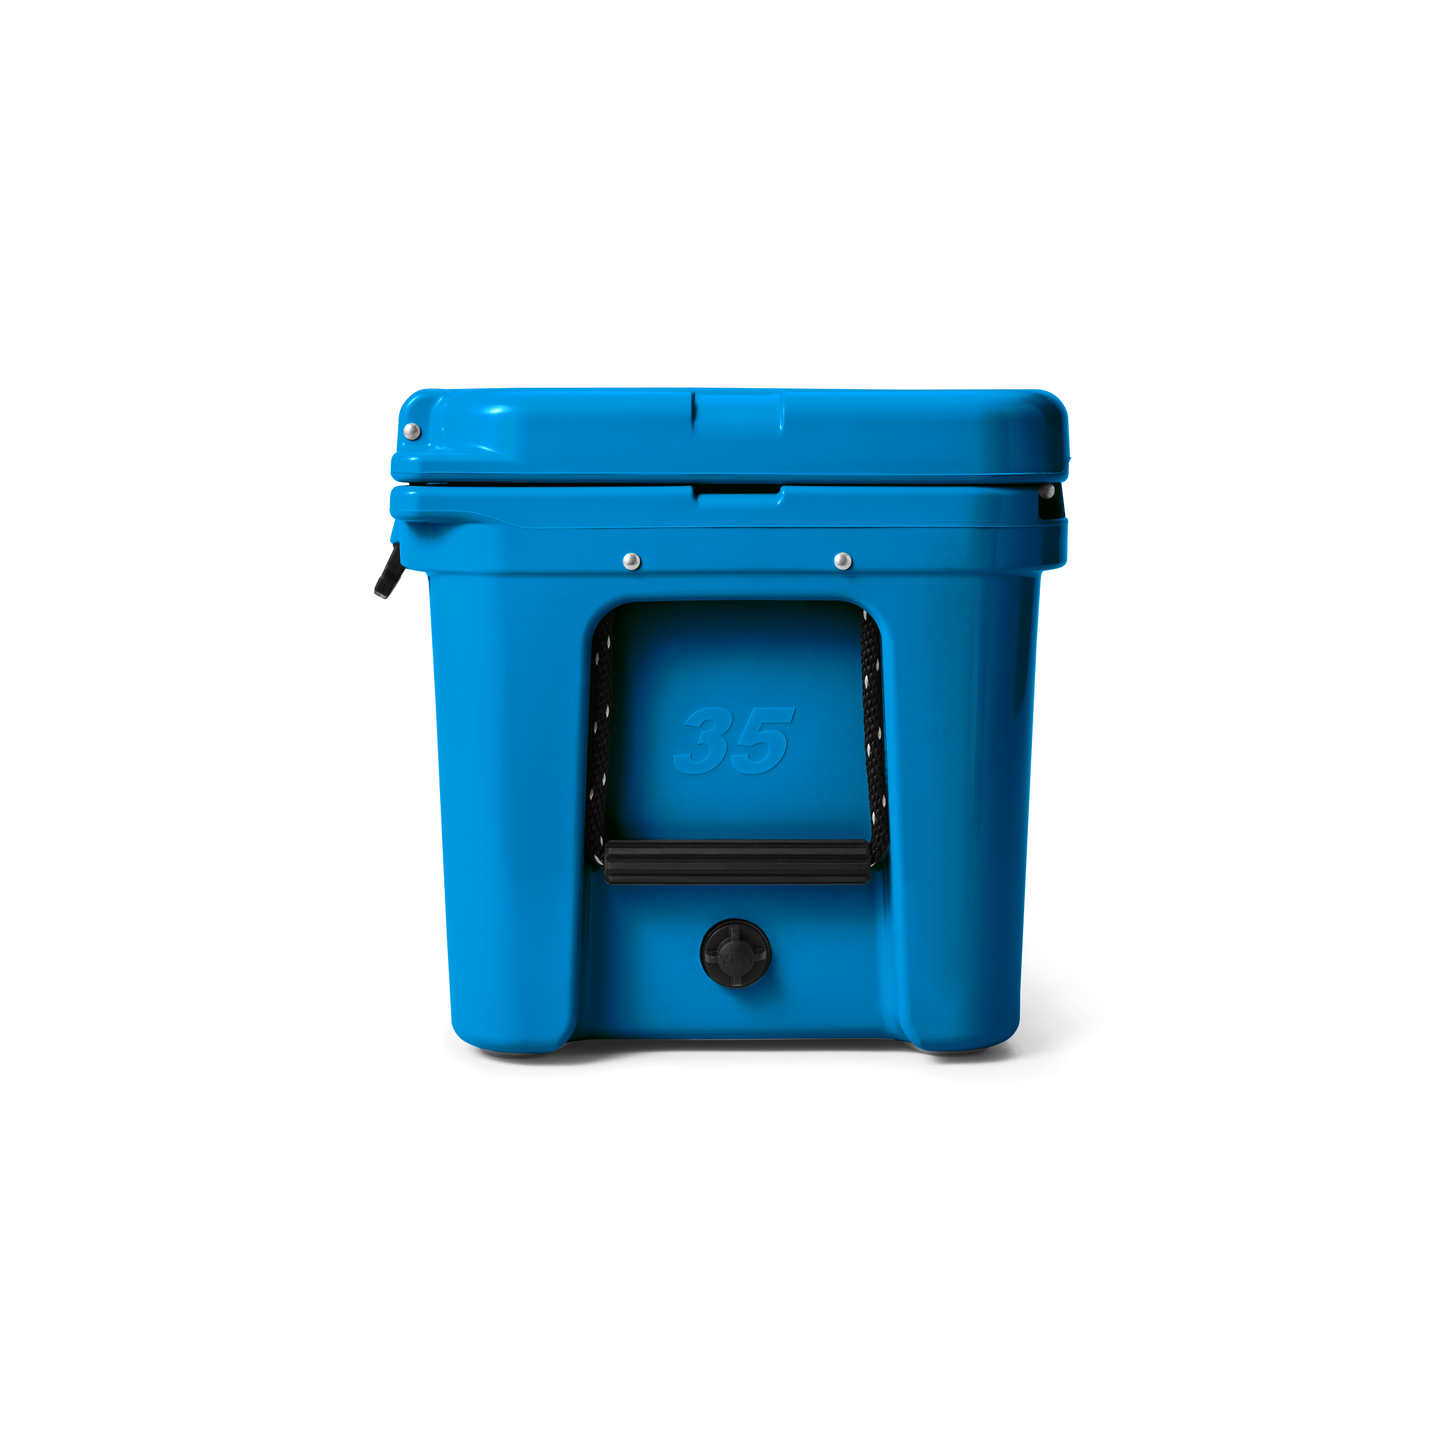 YETI Tundra® 35 Kühlbox Big Wave Blue